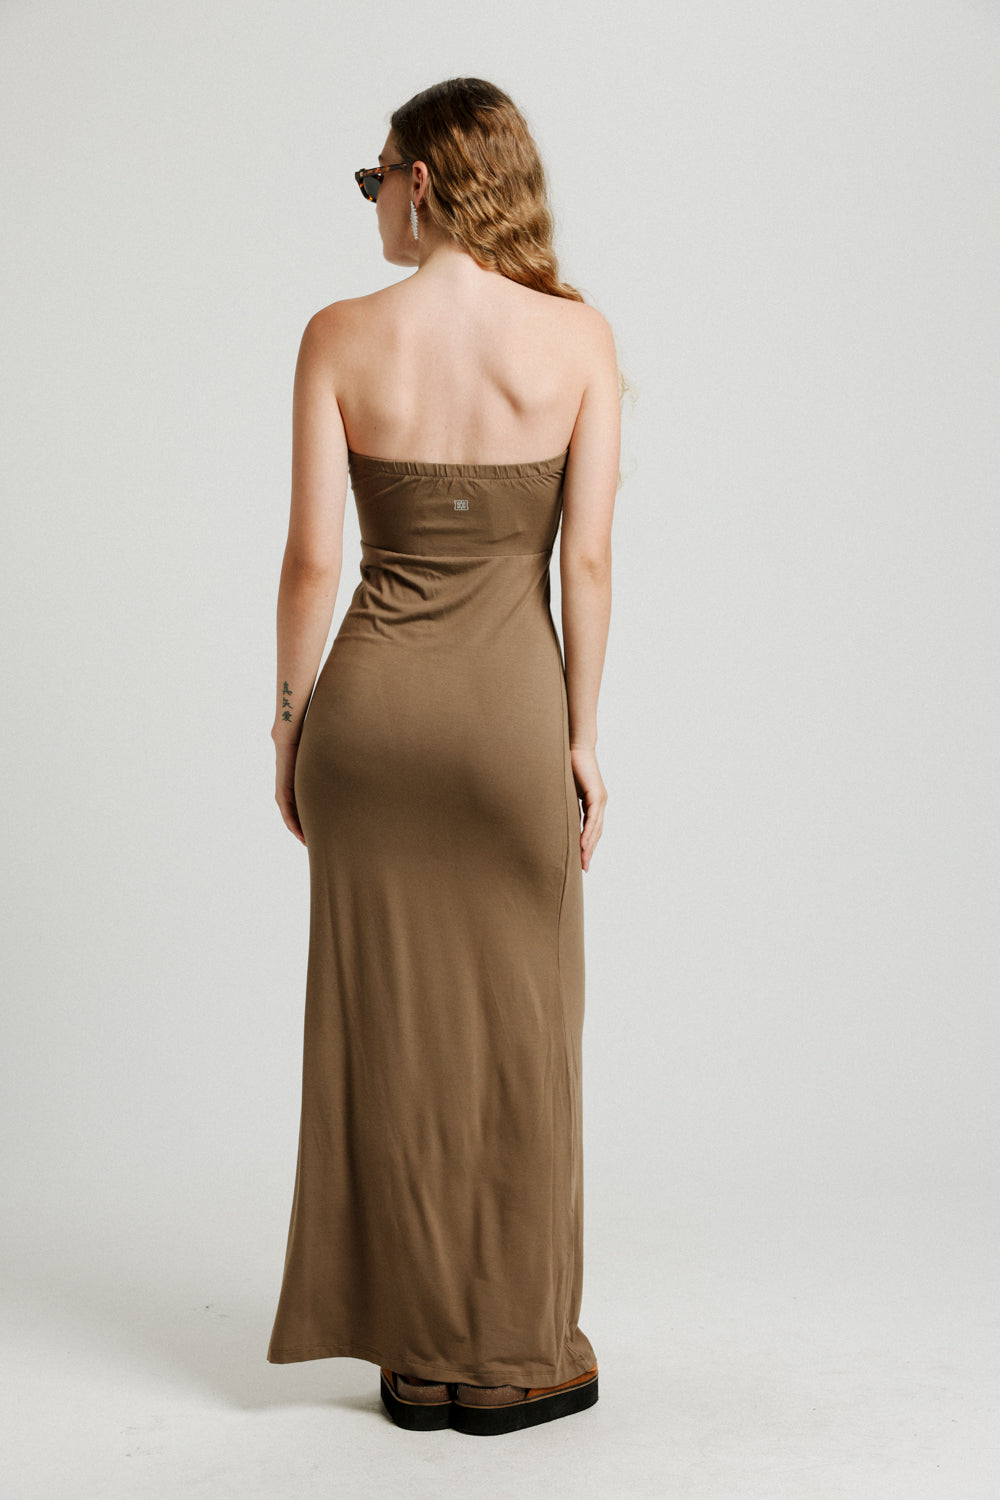 Strapless Brown Dress